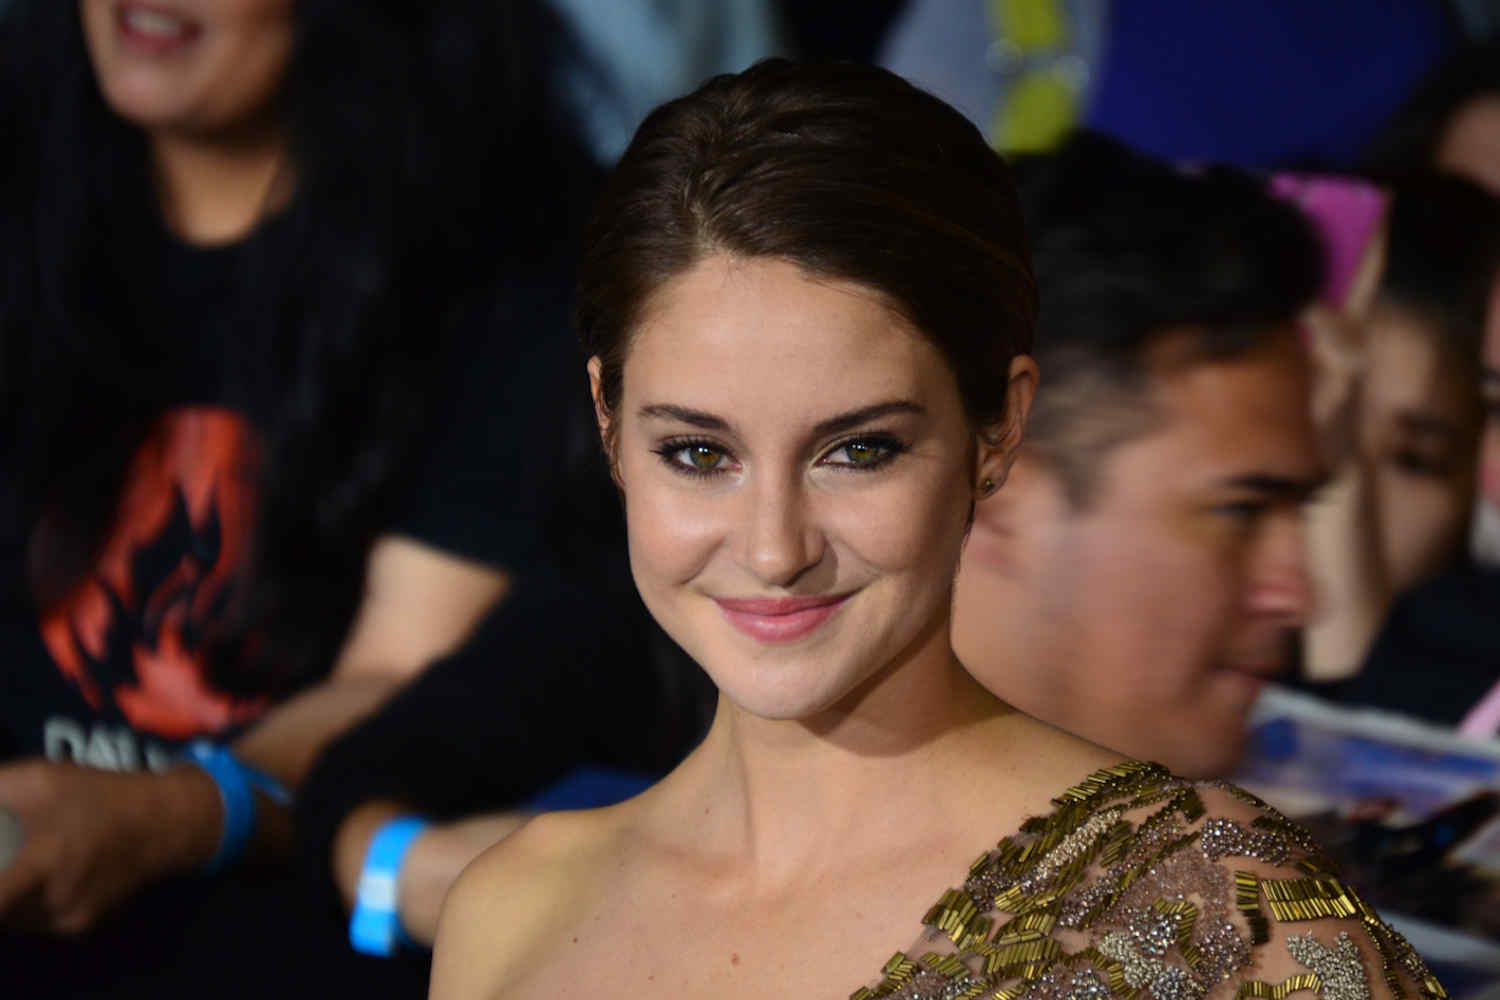 Divergent movie actress Shailene Woodley attends a film premiere